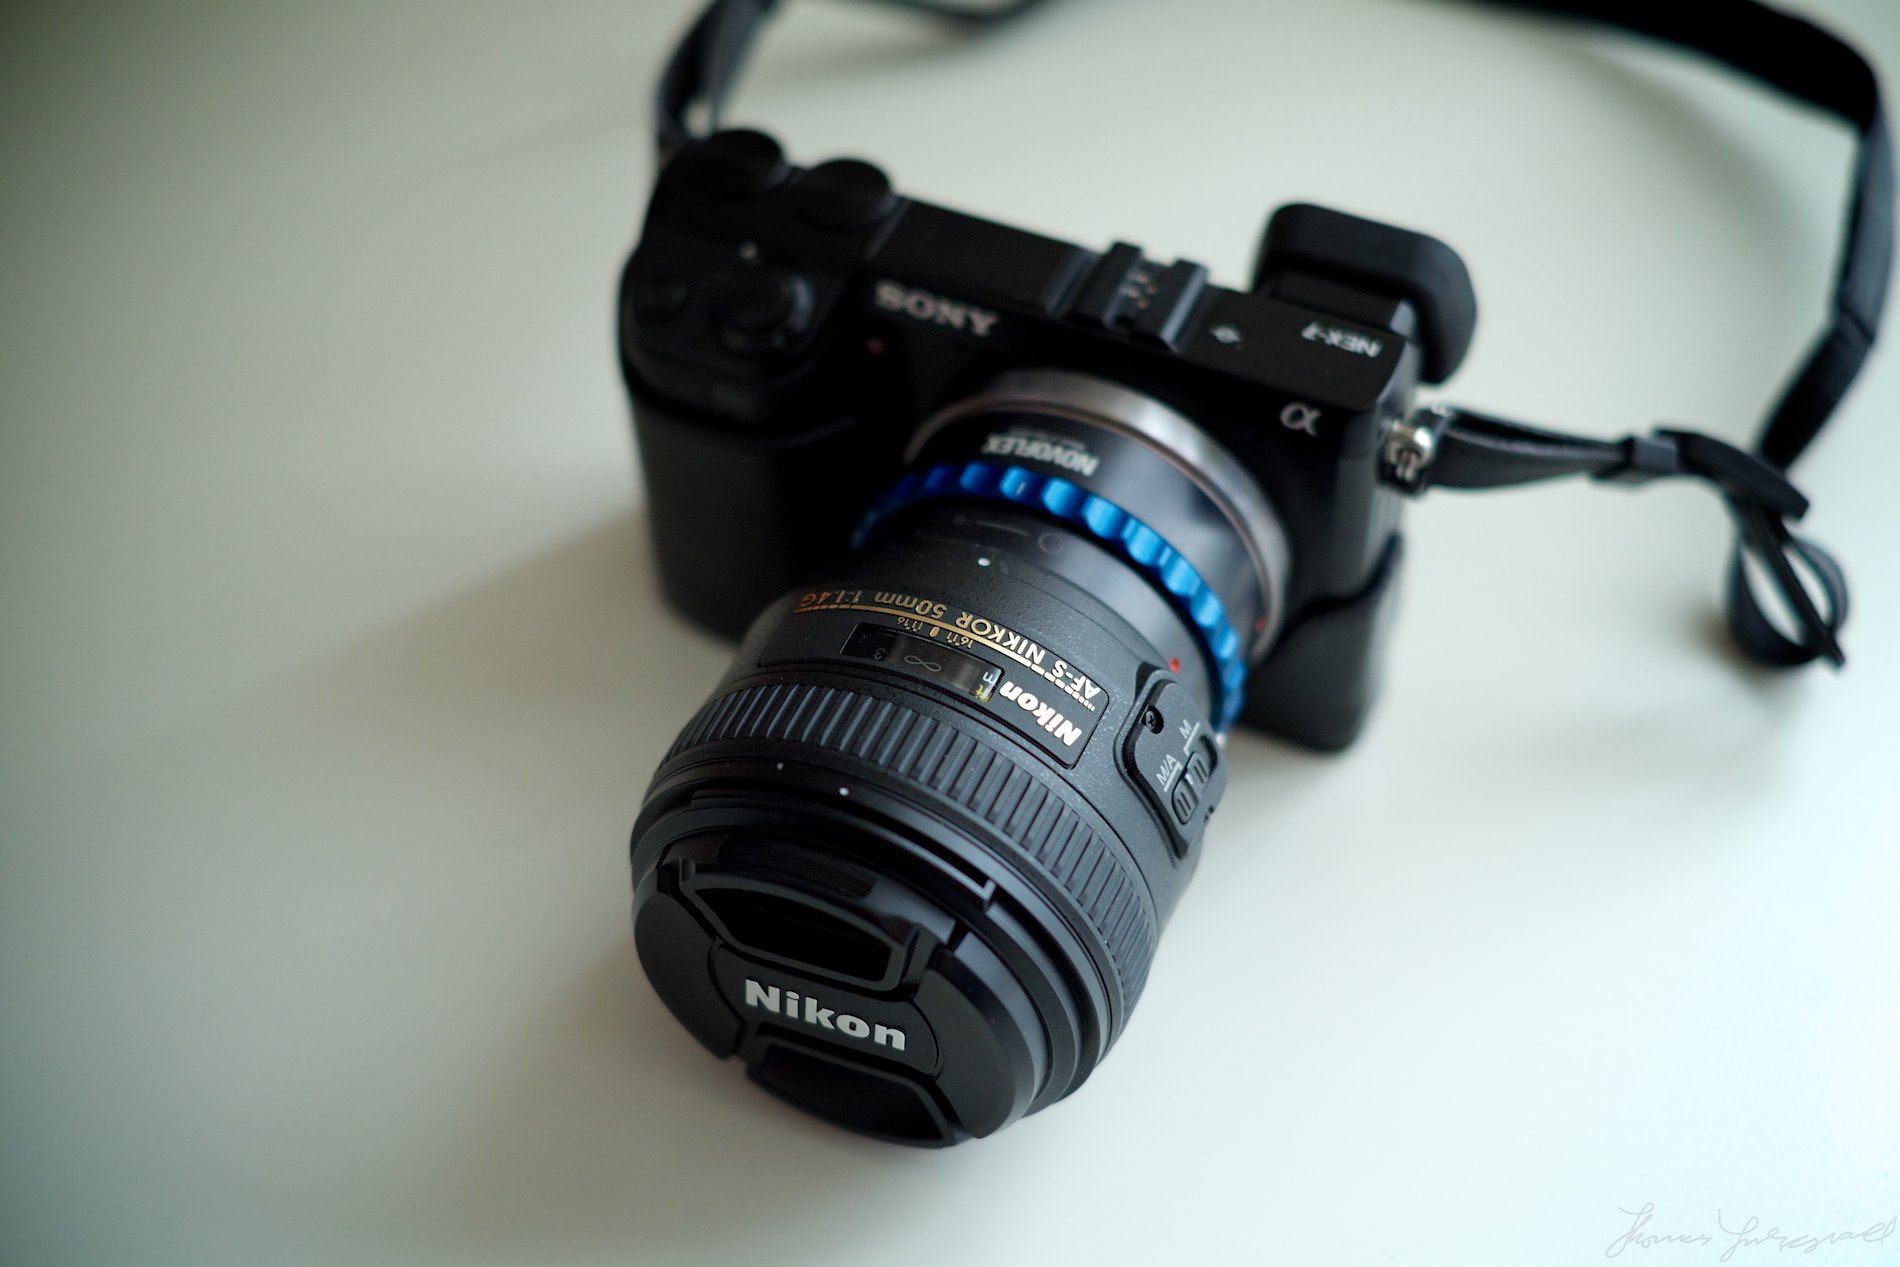 Sony Nex-7 and Nikon 50mm f/1.4 G